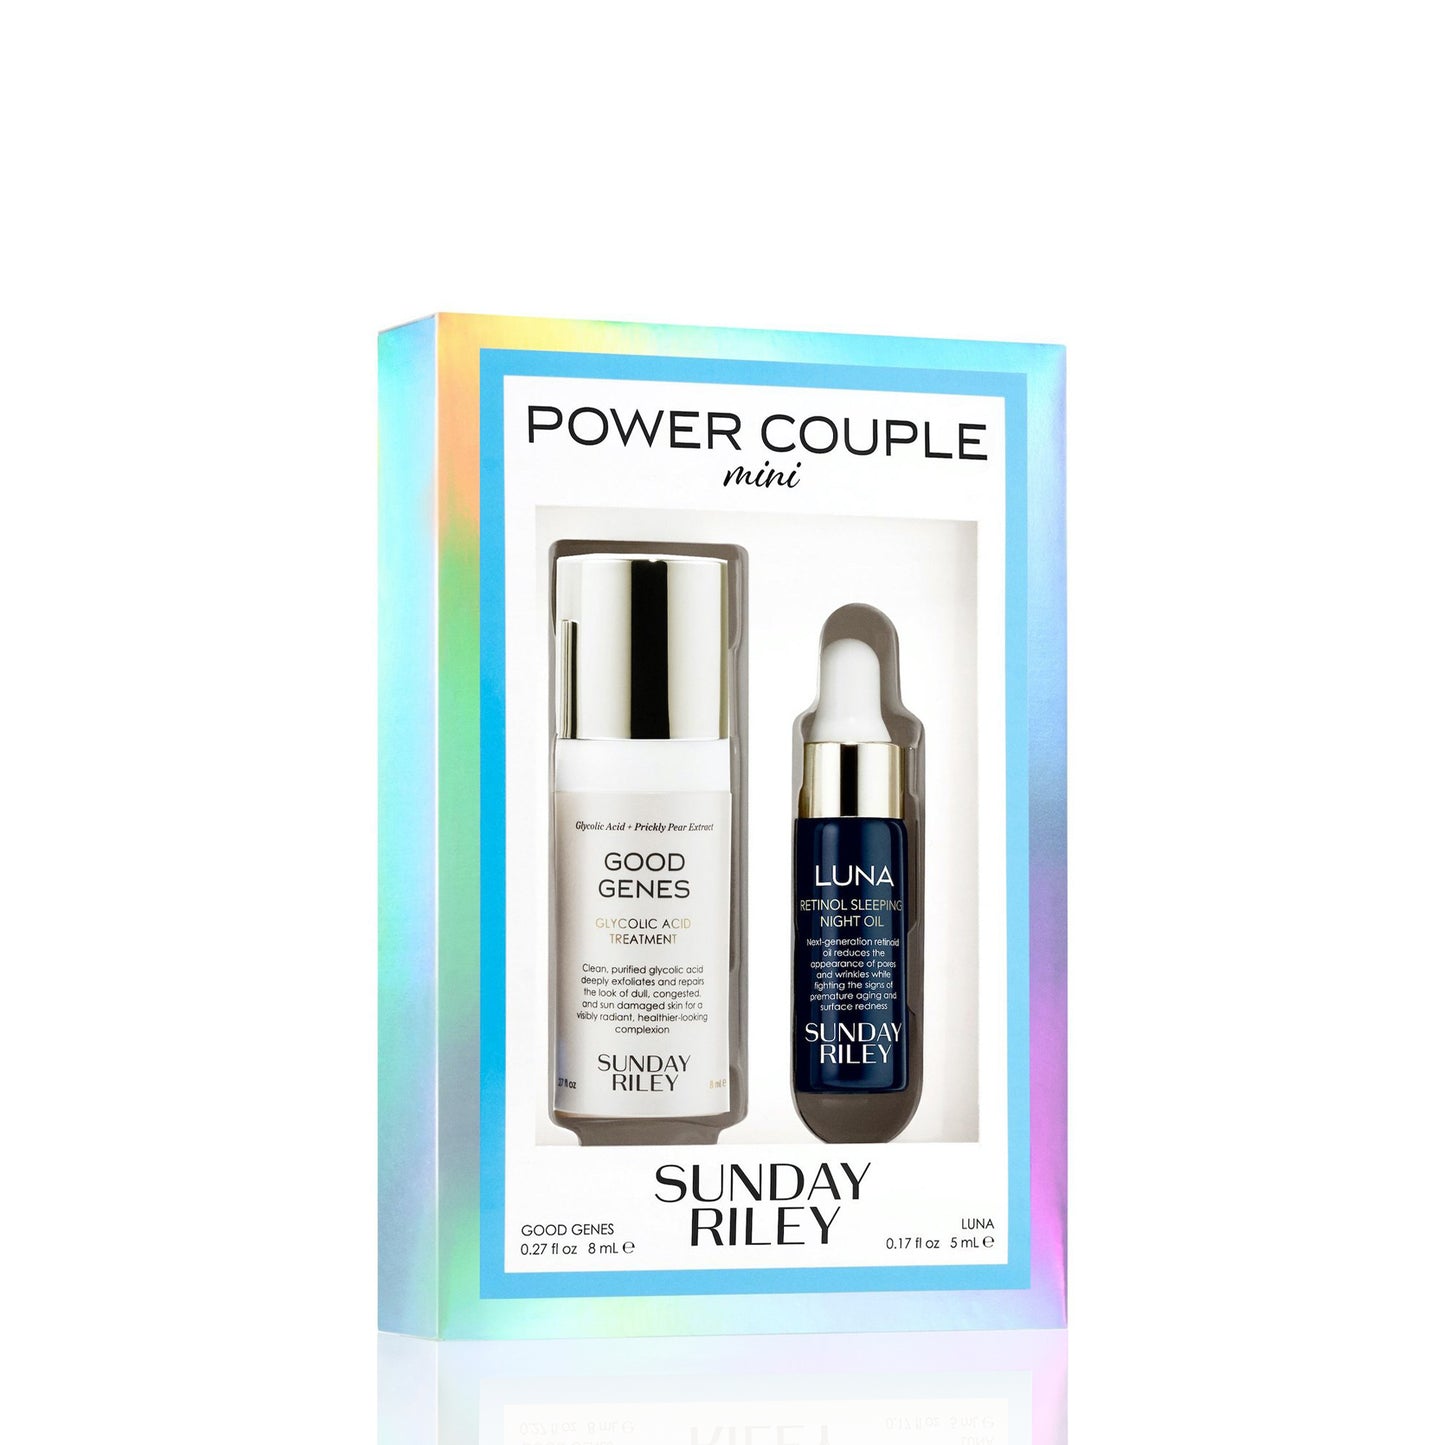 Power Couple Mini kit pack shot with Good Genes Glycolic Acid Treatment 8ml and Luna Retinol Sleeping Night Oil 5ml